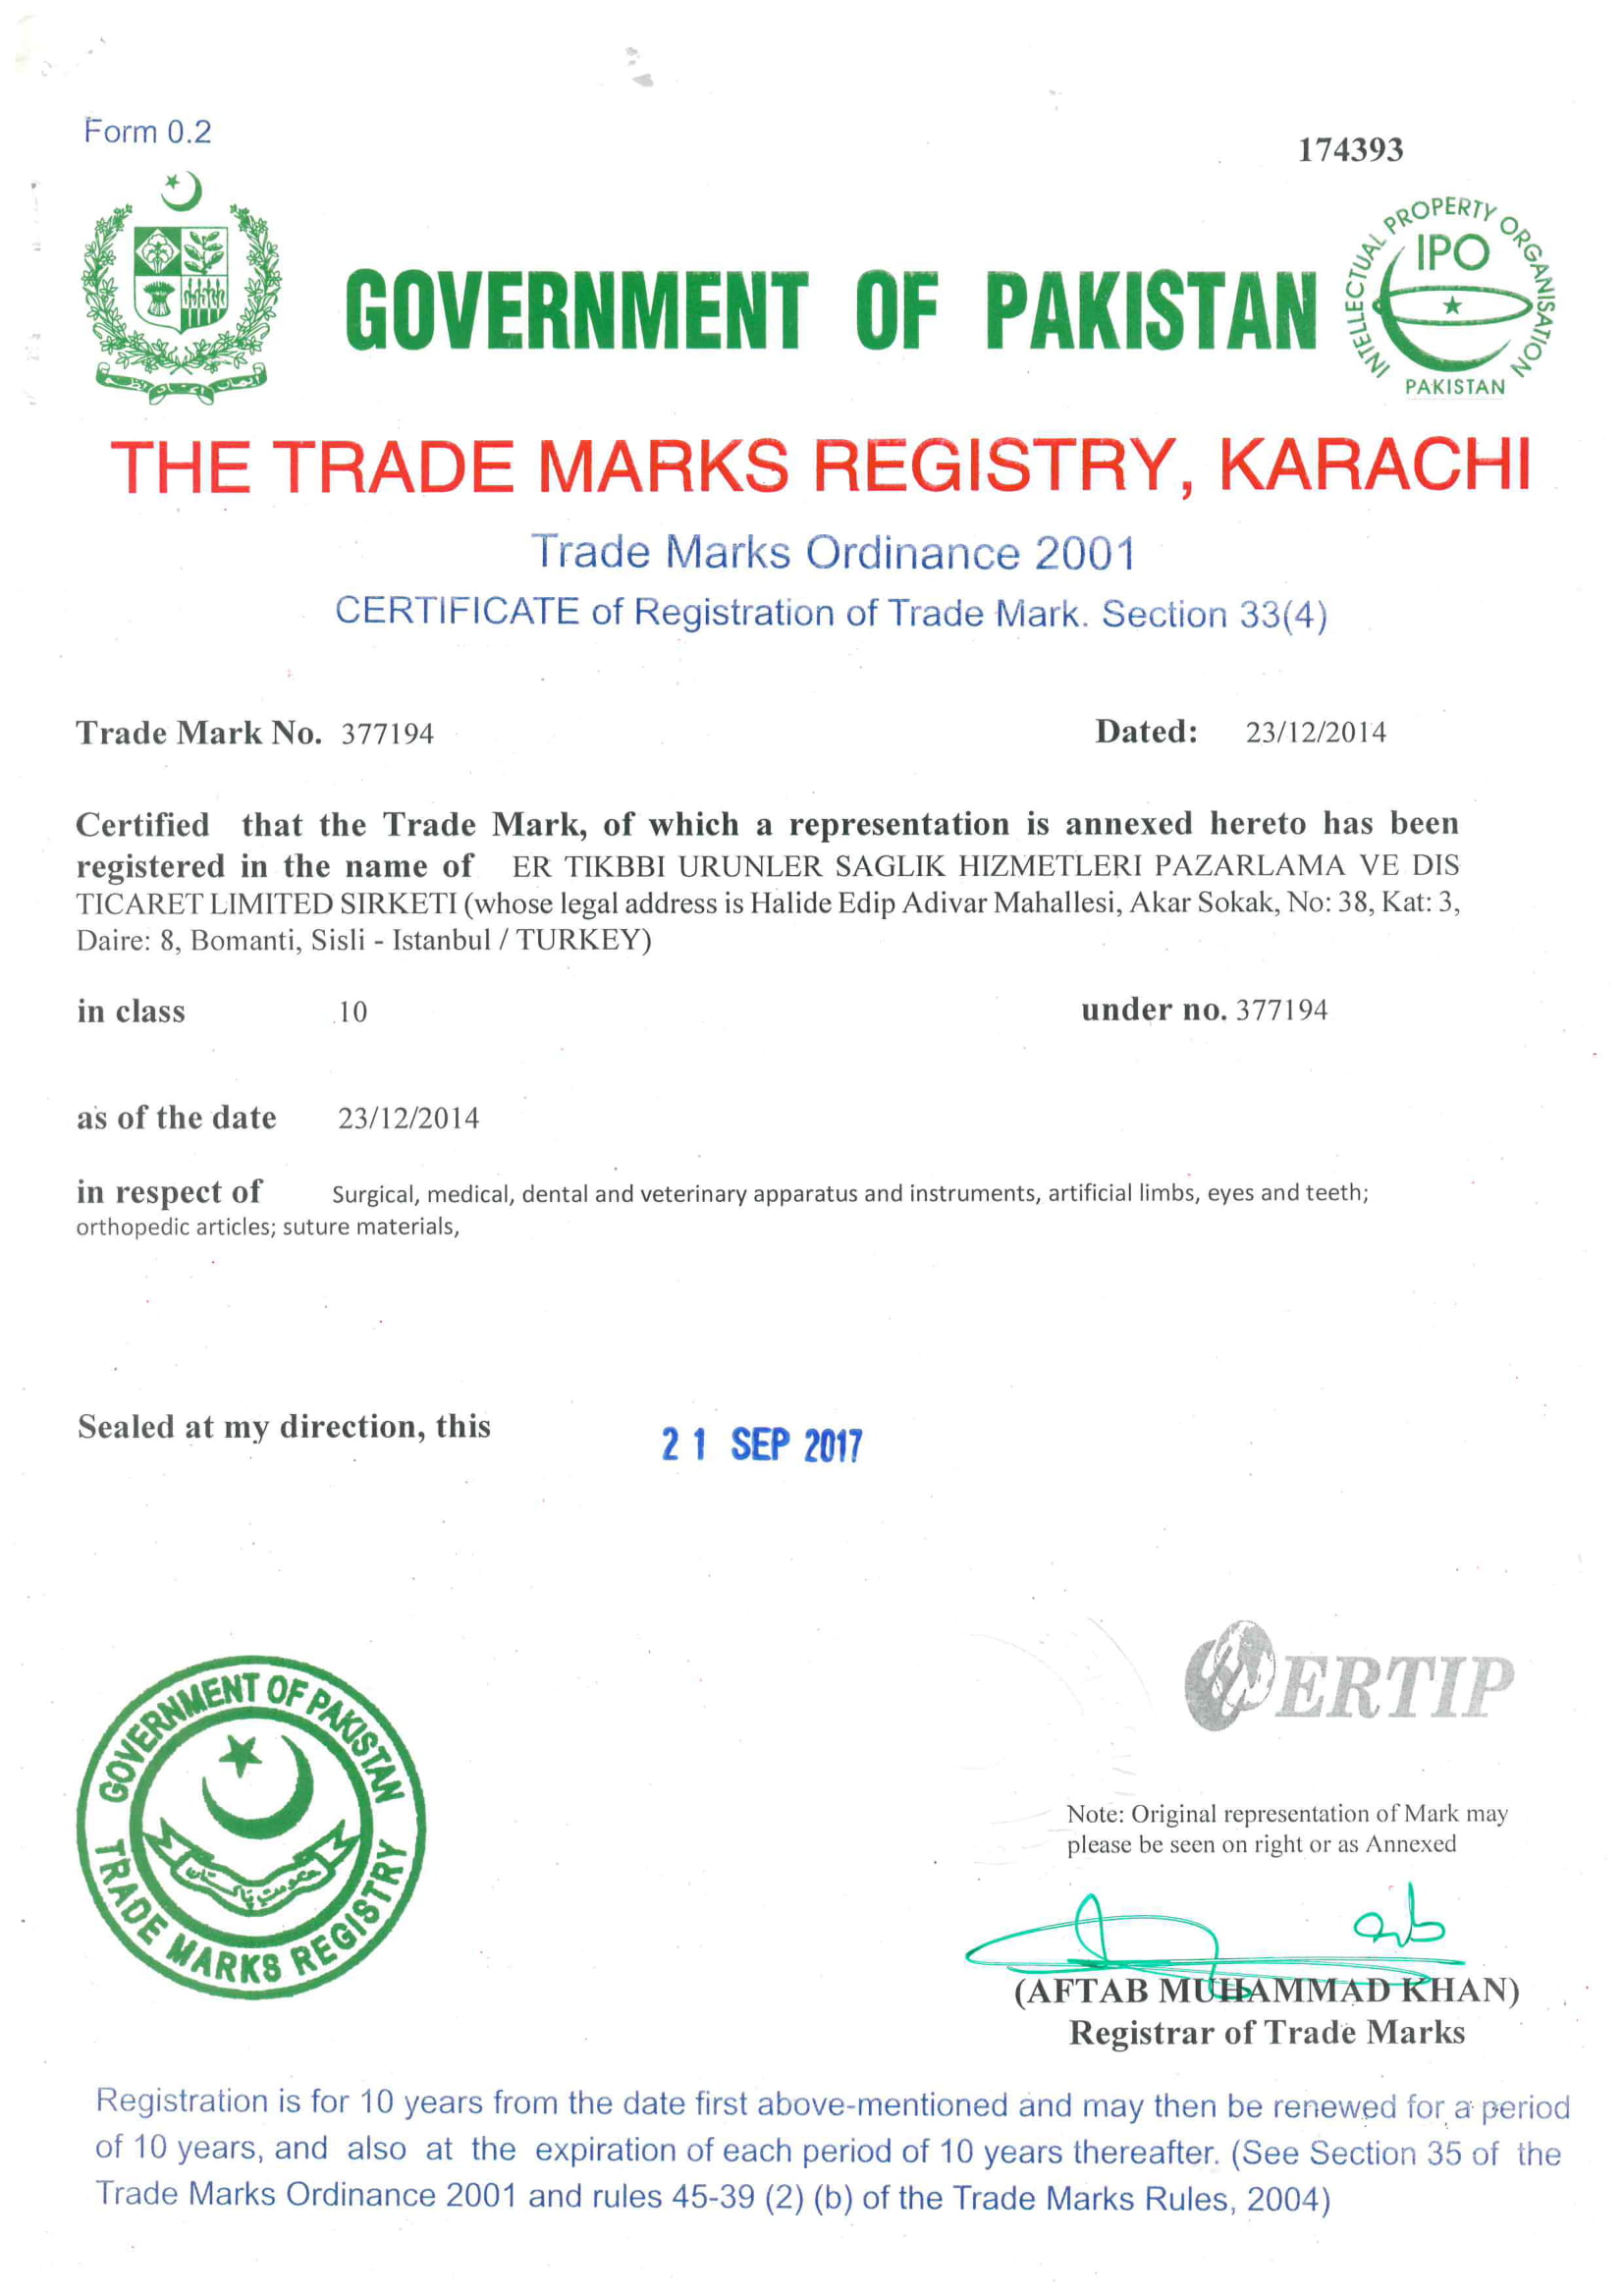 Pakistan Trademark Registration Certificate